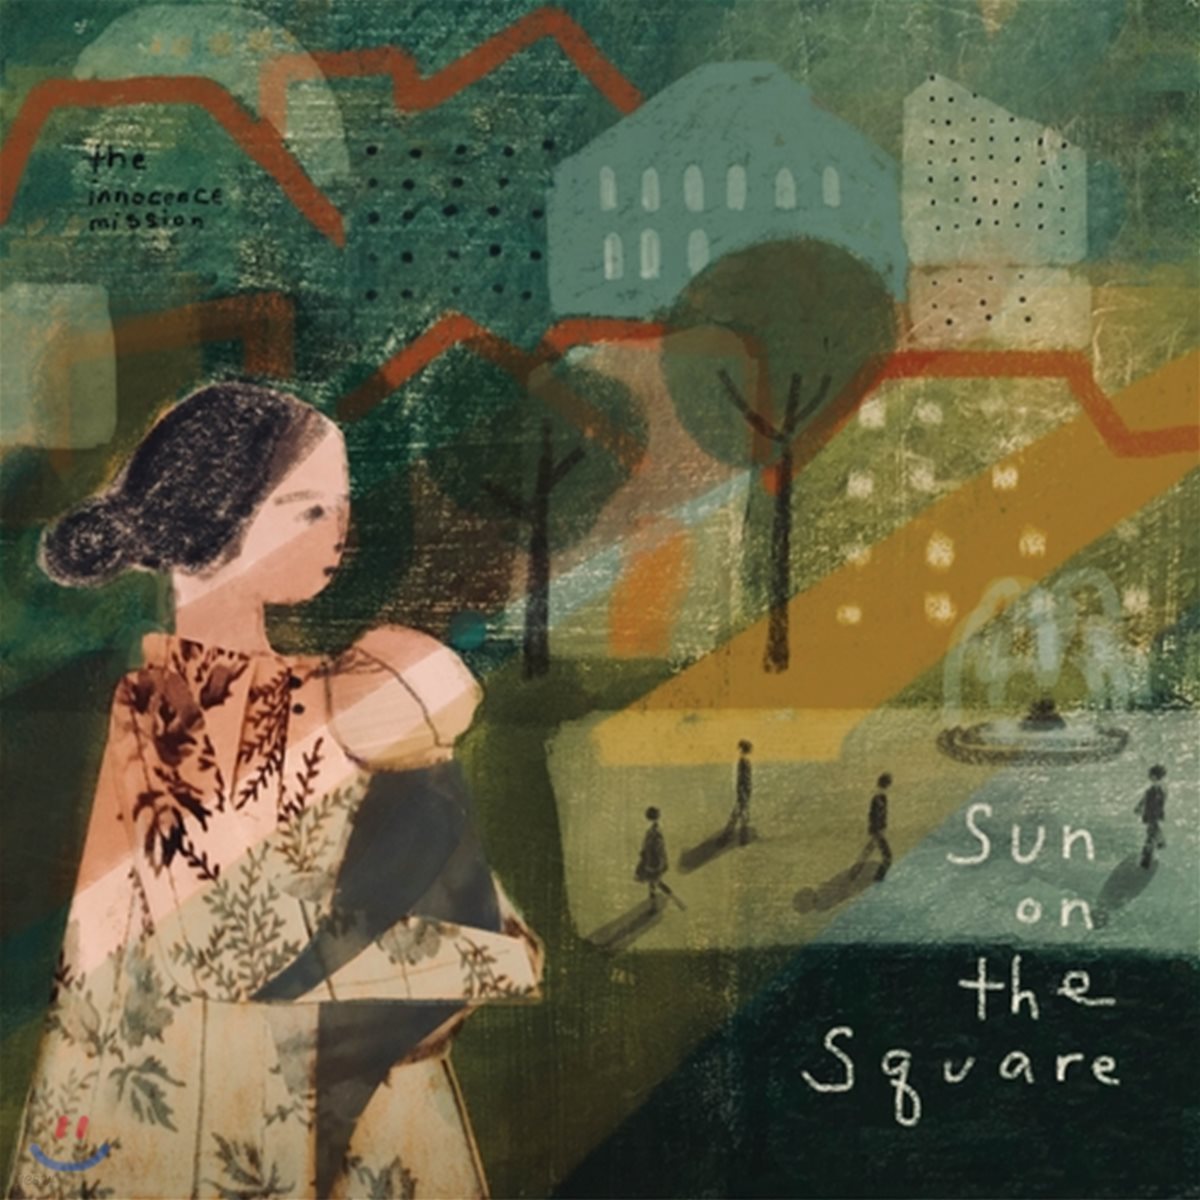 The Innocence Mission - Sun On The Square 이노센트 미션 [투명 컬러 LP]